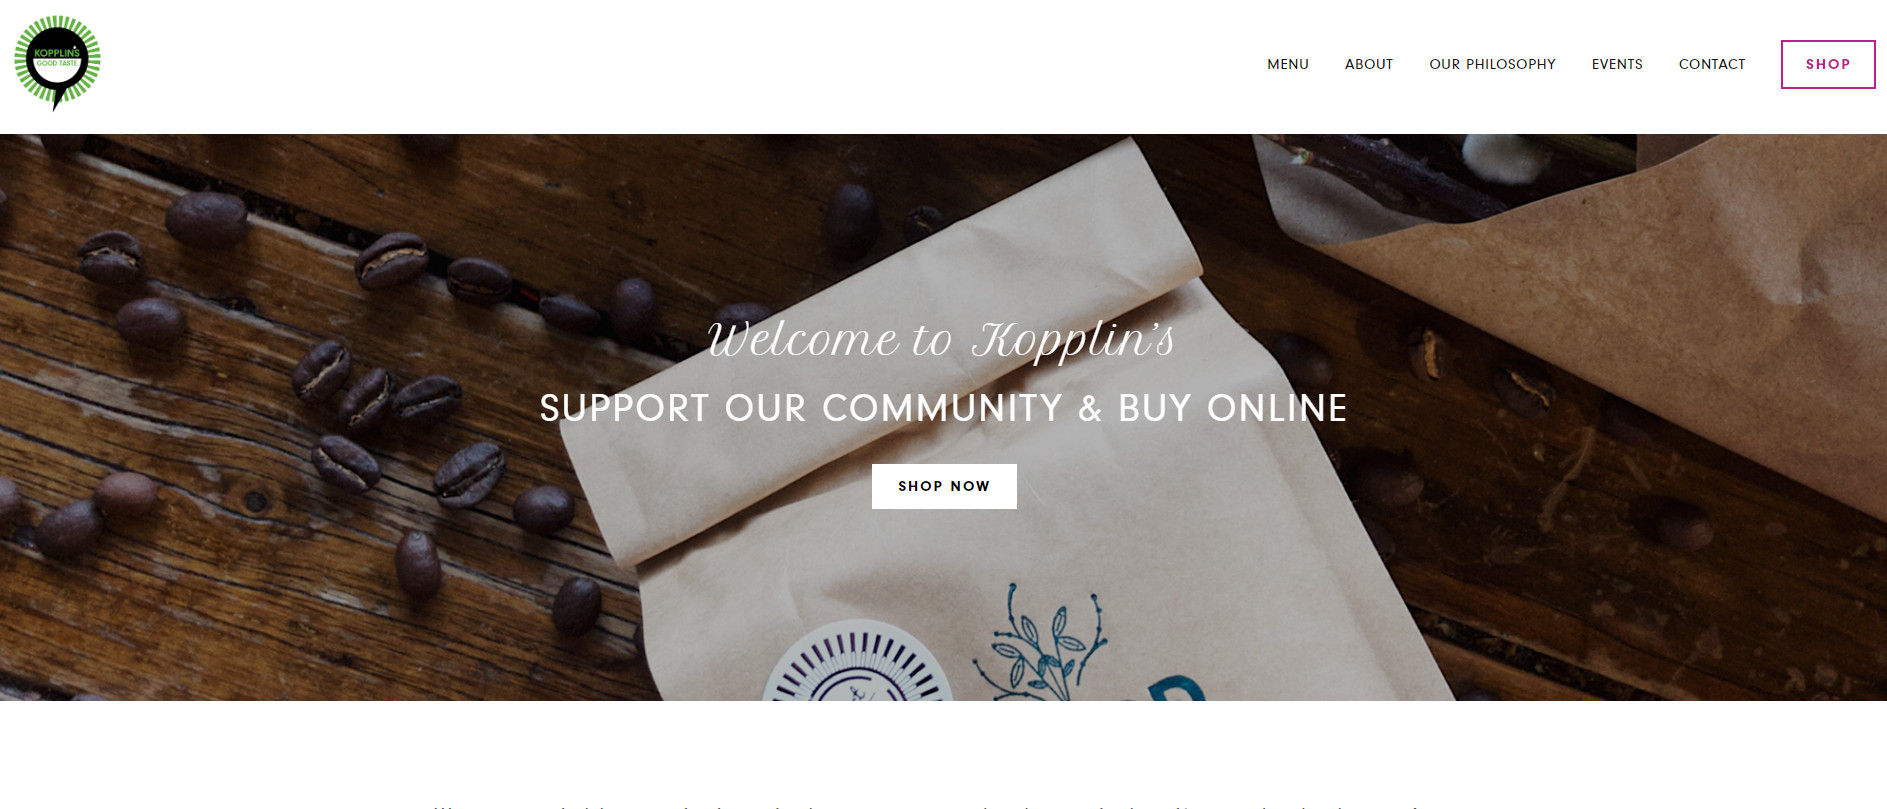 best coffee shop website example: Kopplin's Coffee